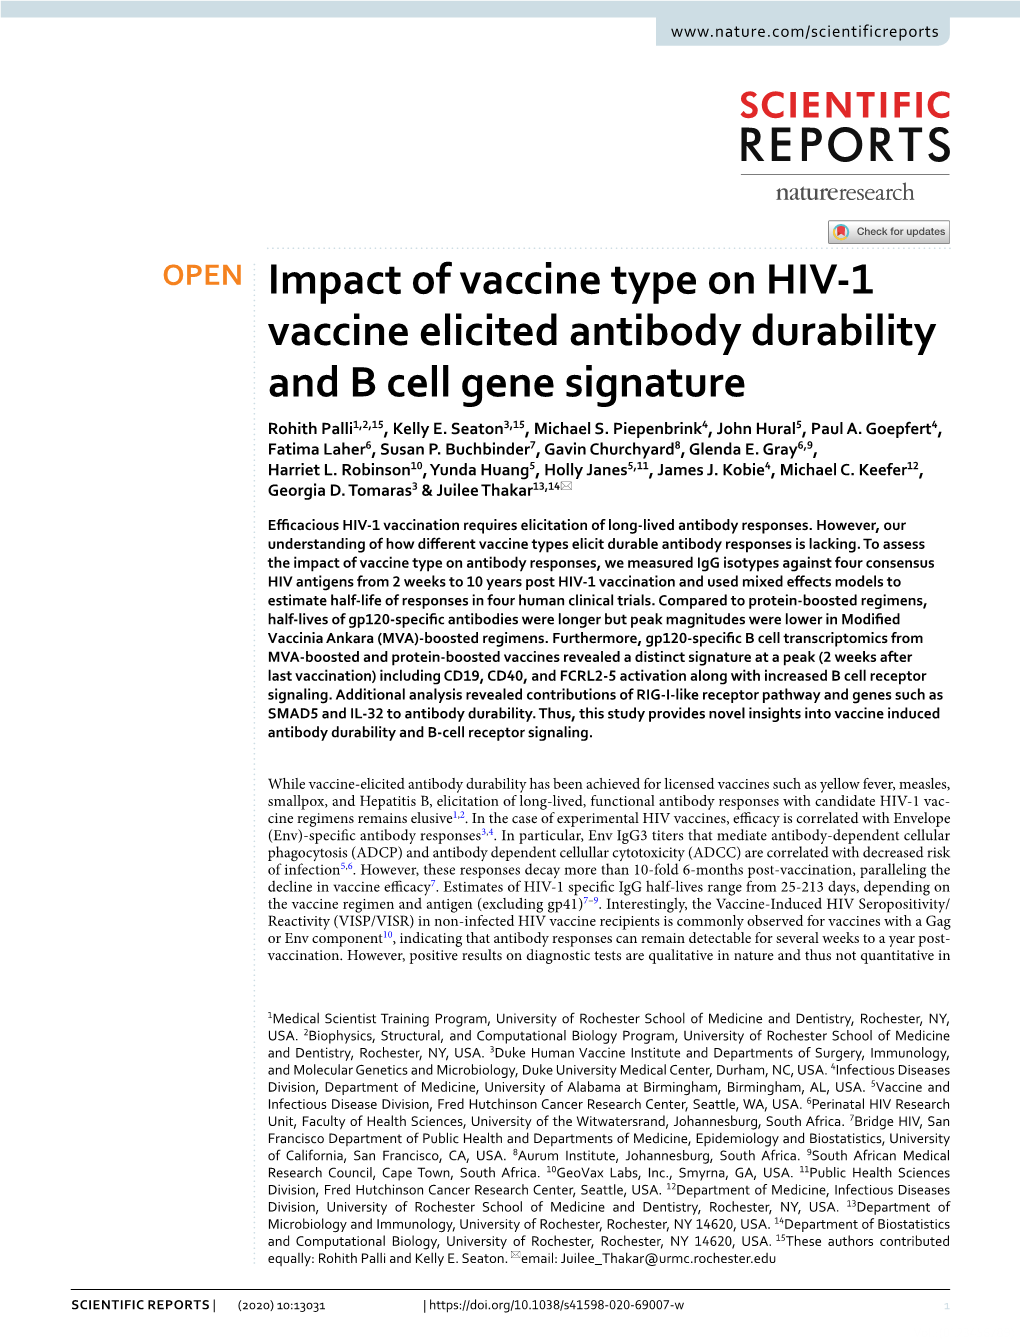 Impact of Vaccine Type on HIV-1 Vaccine Elicited Antibody Durability